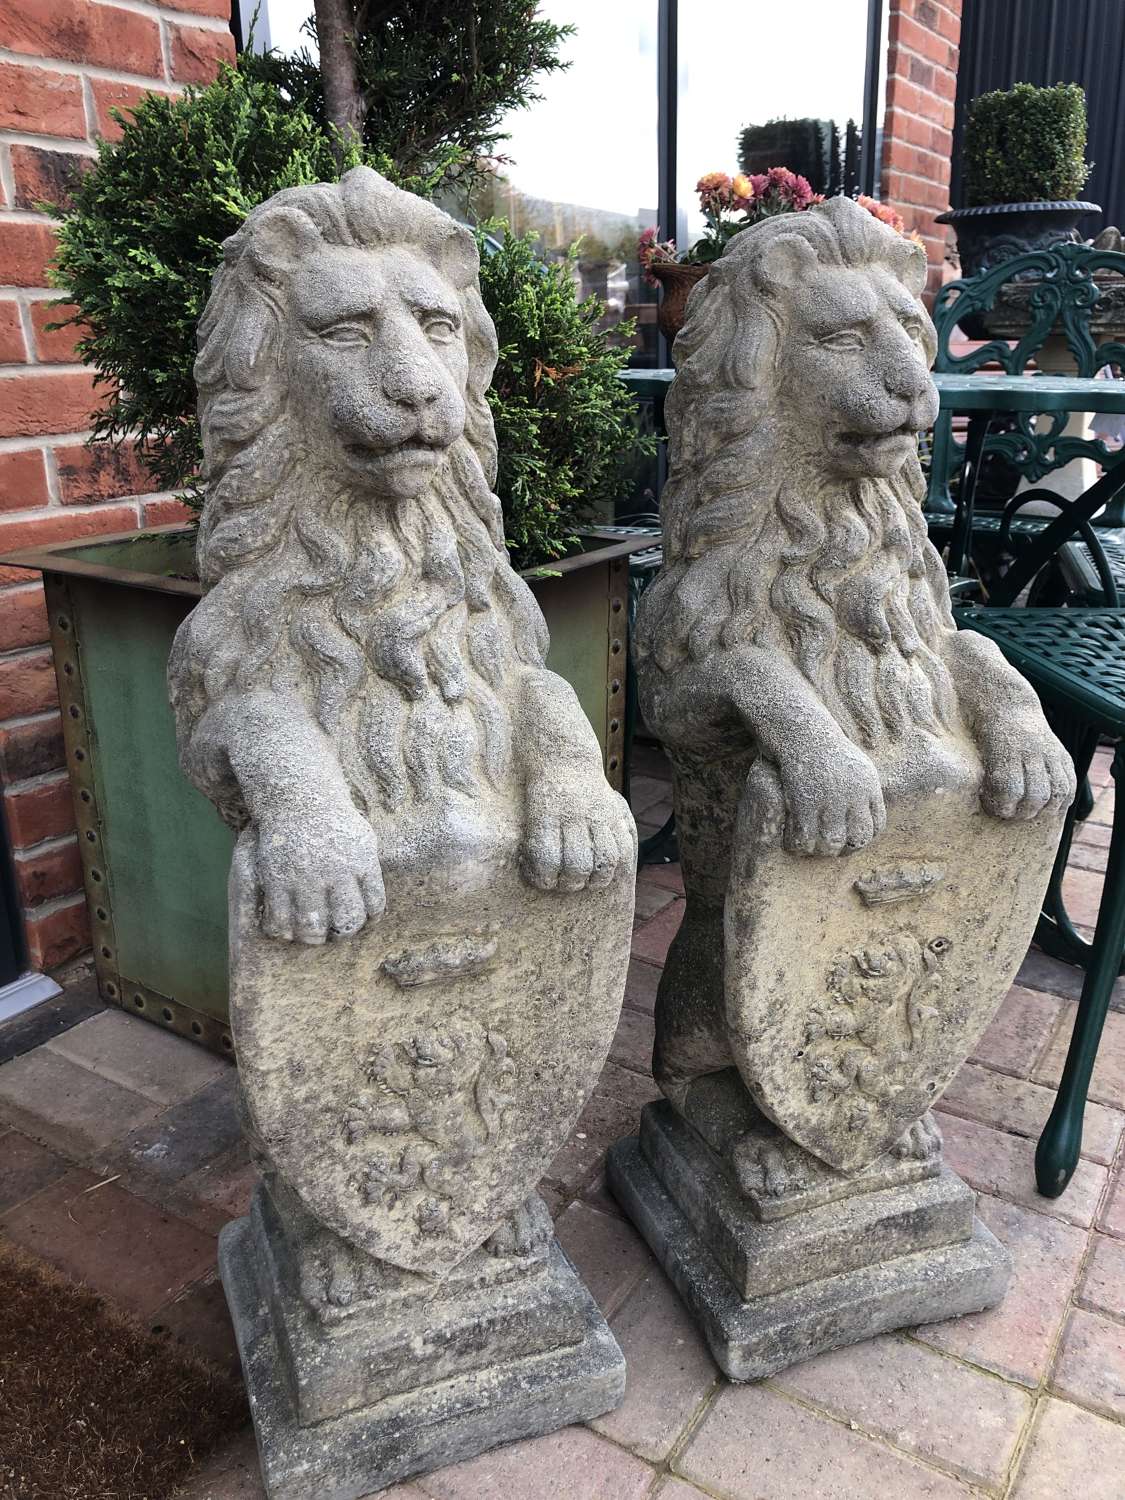 Pair of Heraldic stone lions